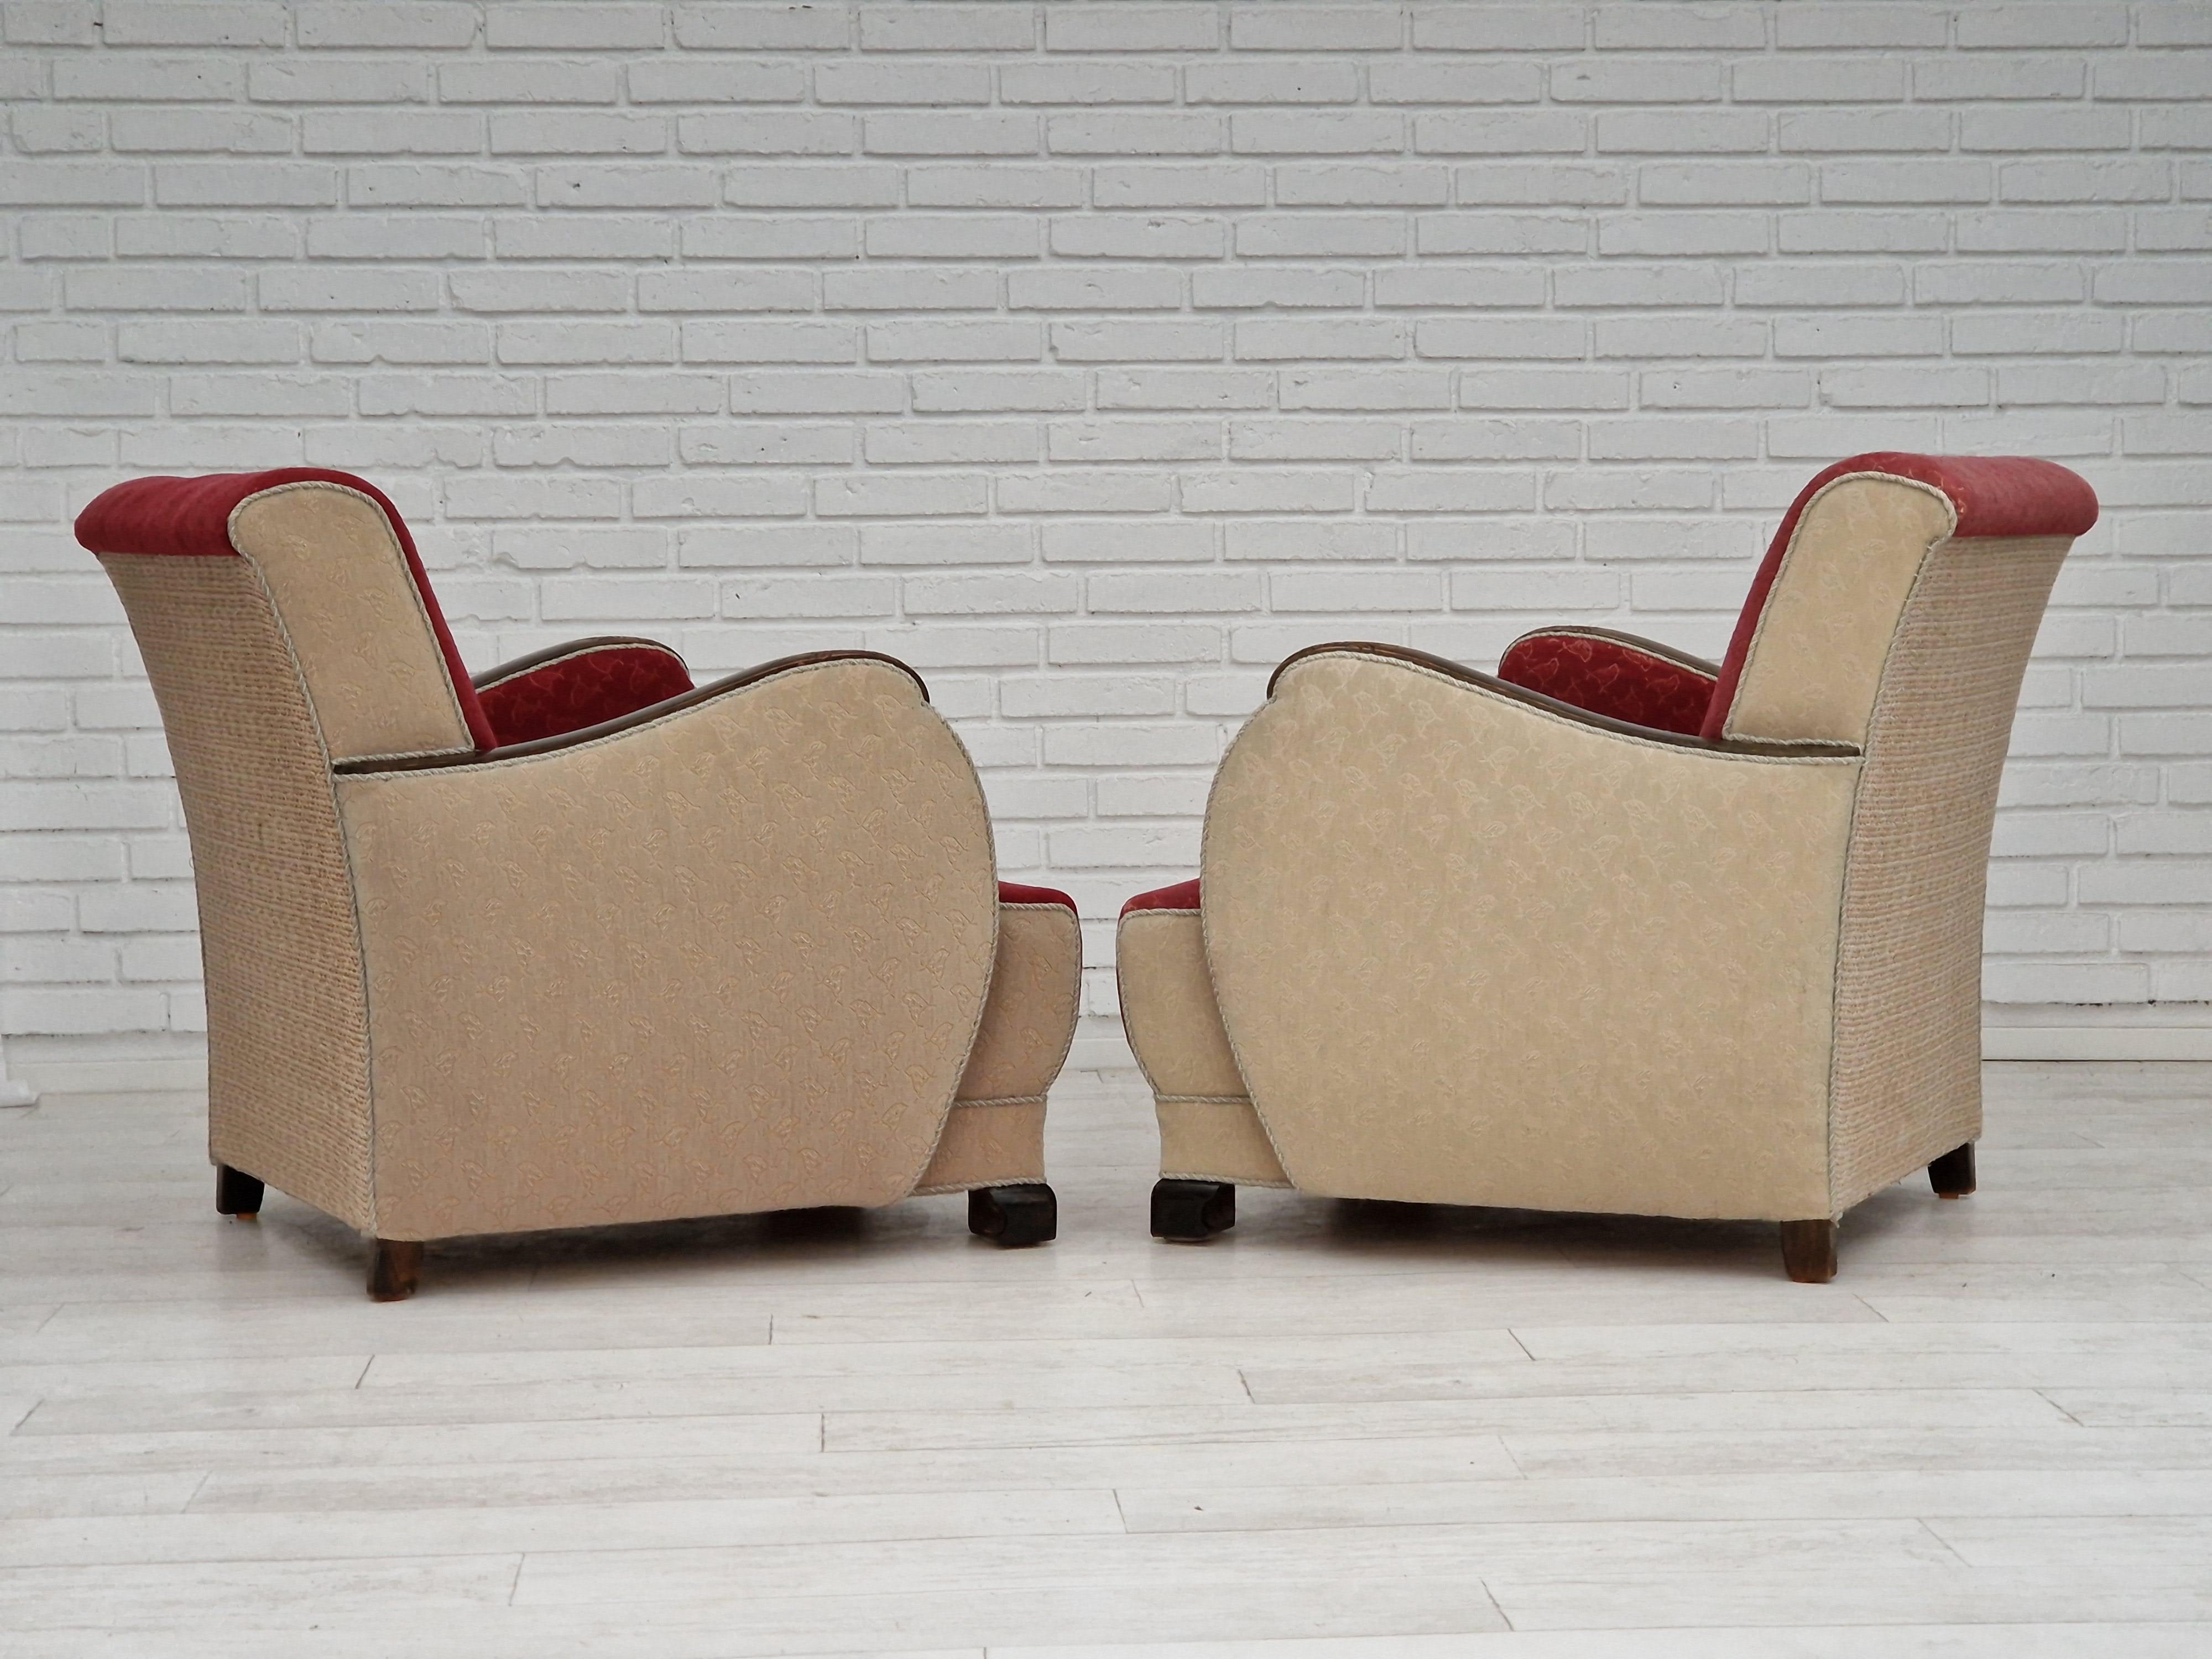 1950s, Scandinavian Art Deco Chairs, Original Condition For Sale 1